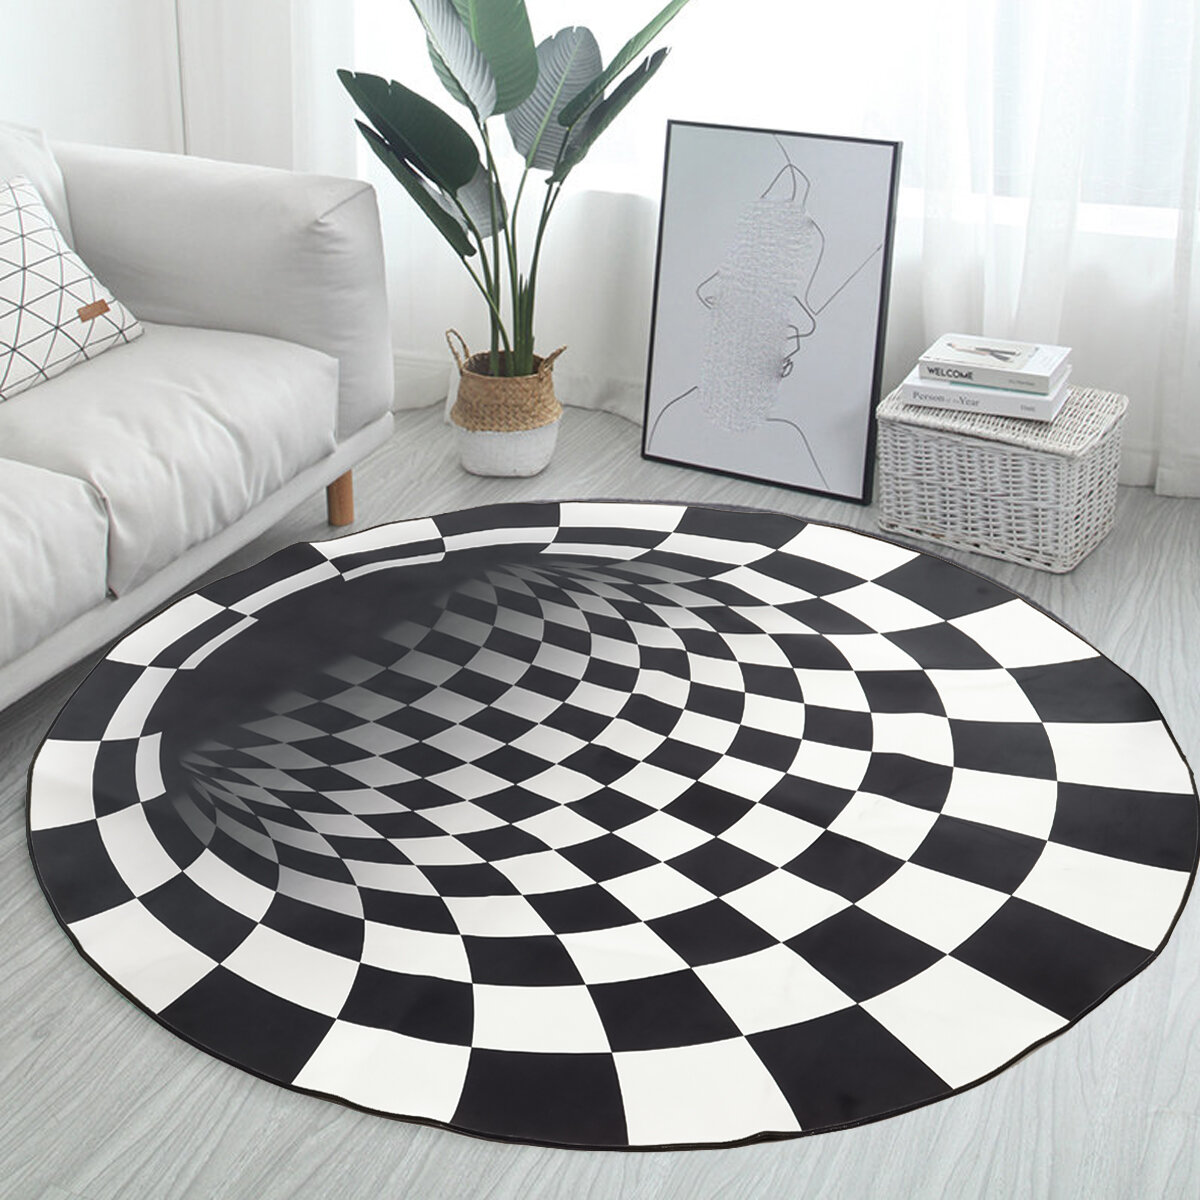 Bakeey Driedimensionale 3D Illusion Tapijt Vloermat Antislip Home Room Carpet Vloer Deurmat